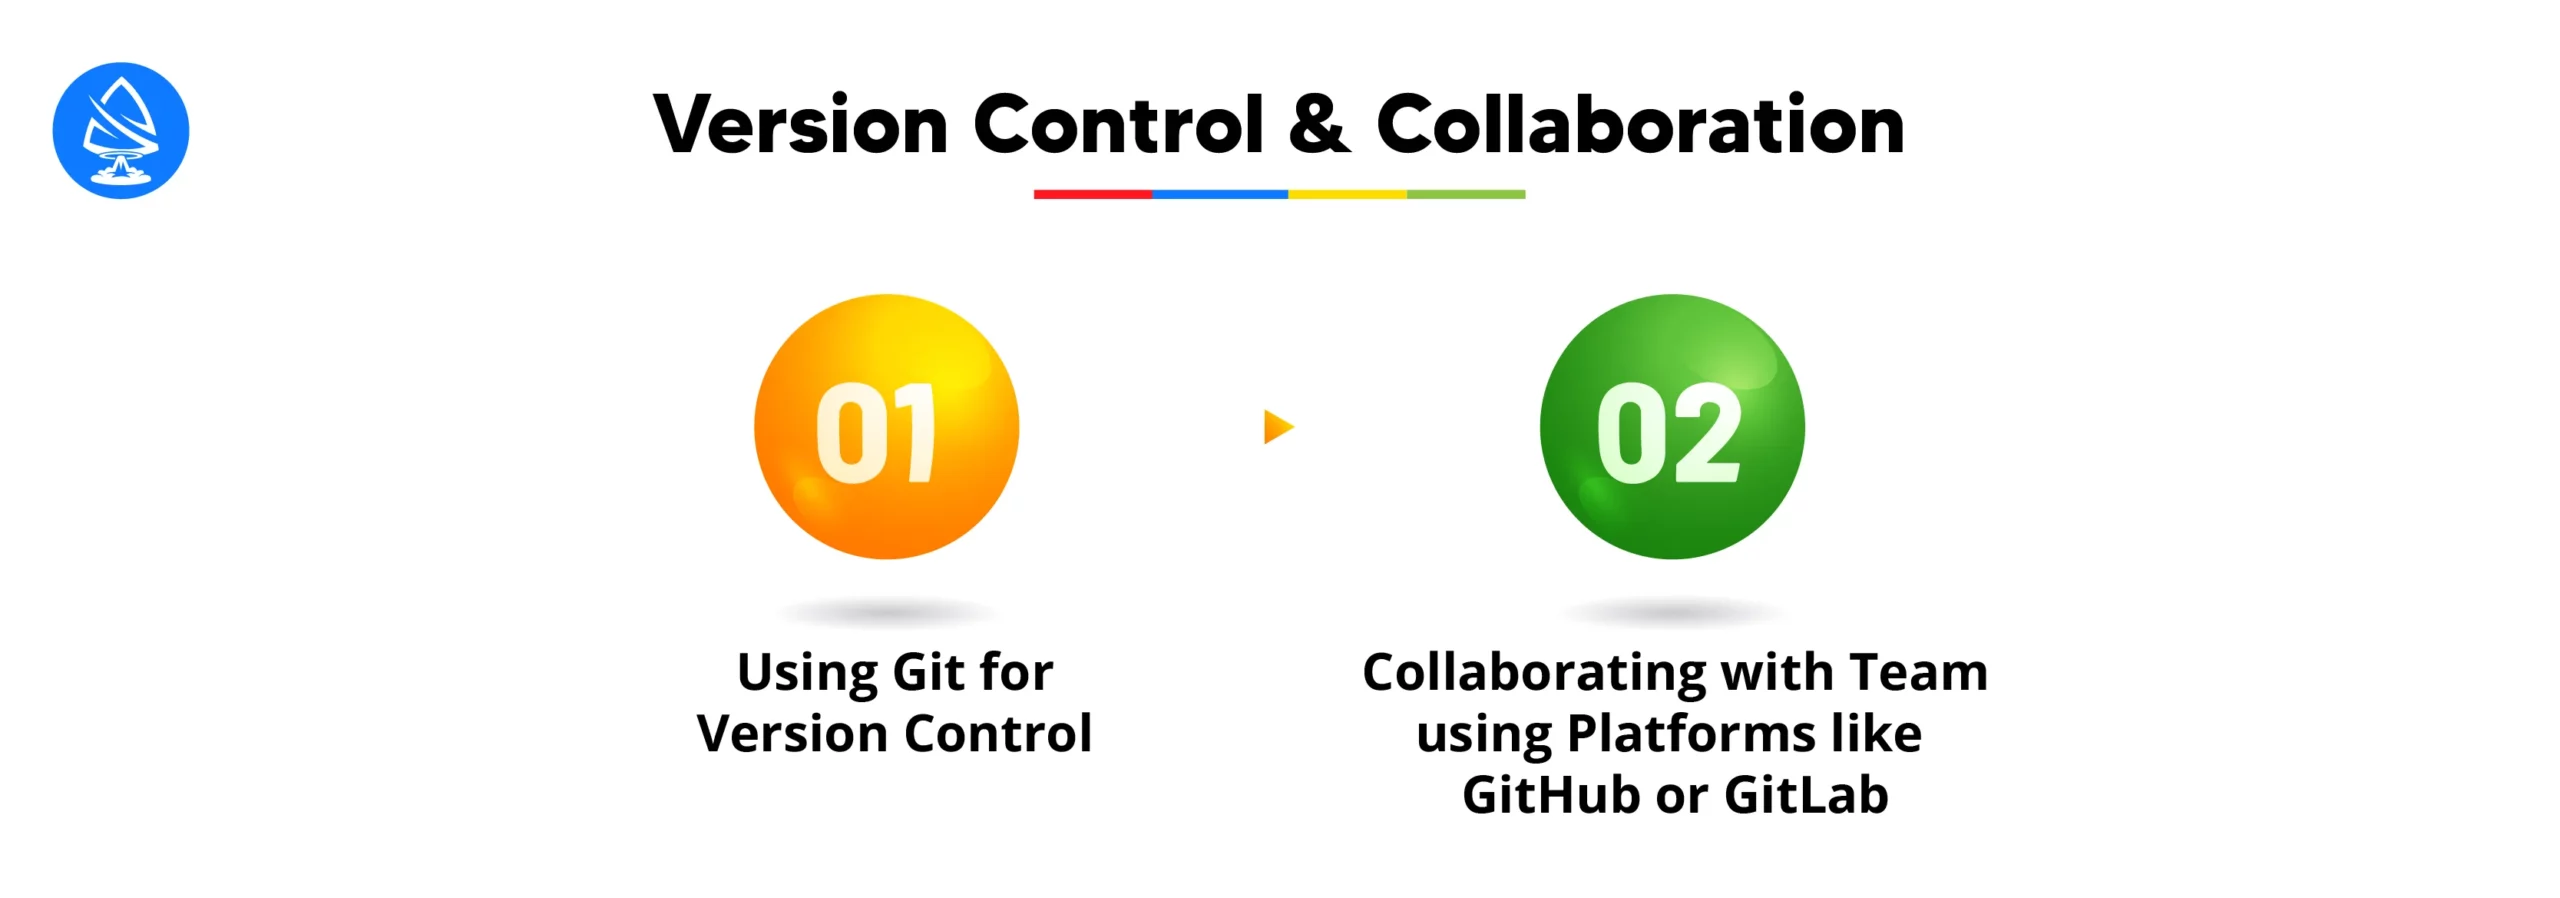 Version Control & Collaboration 